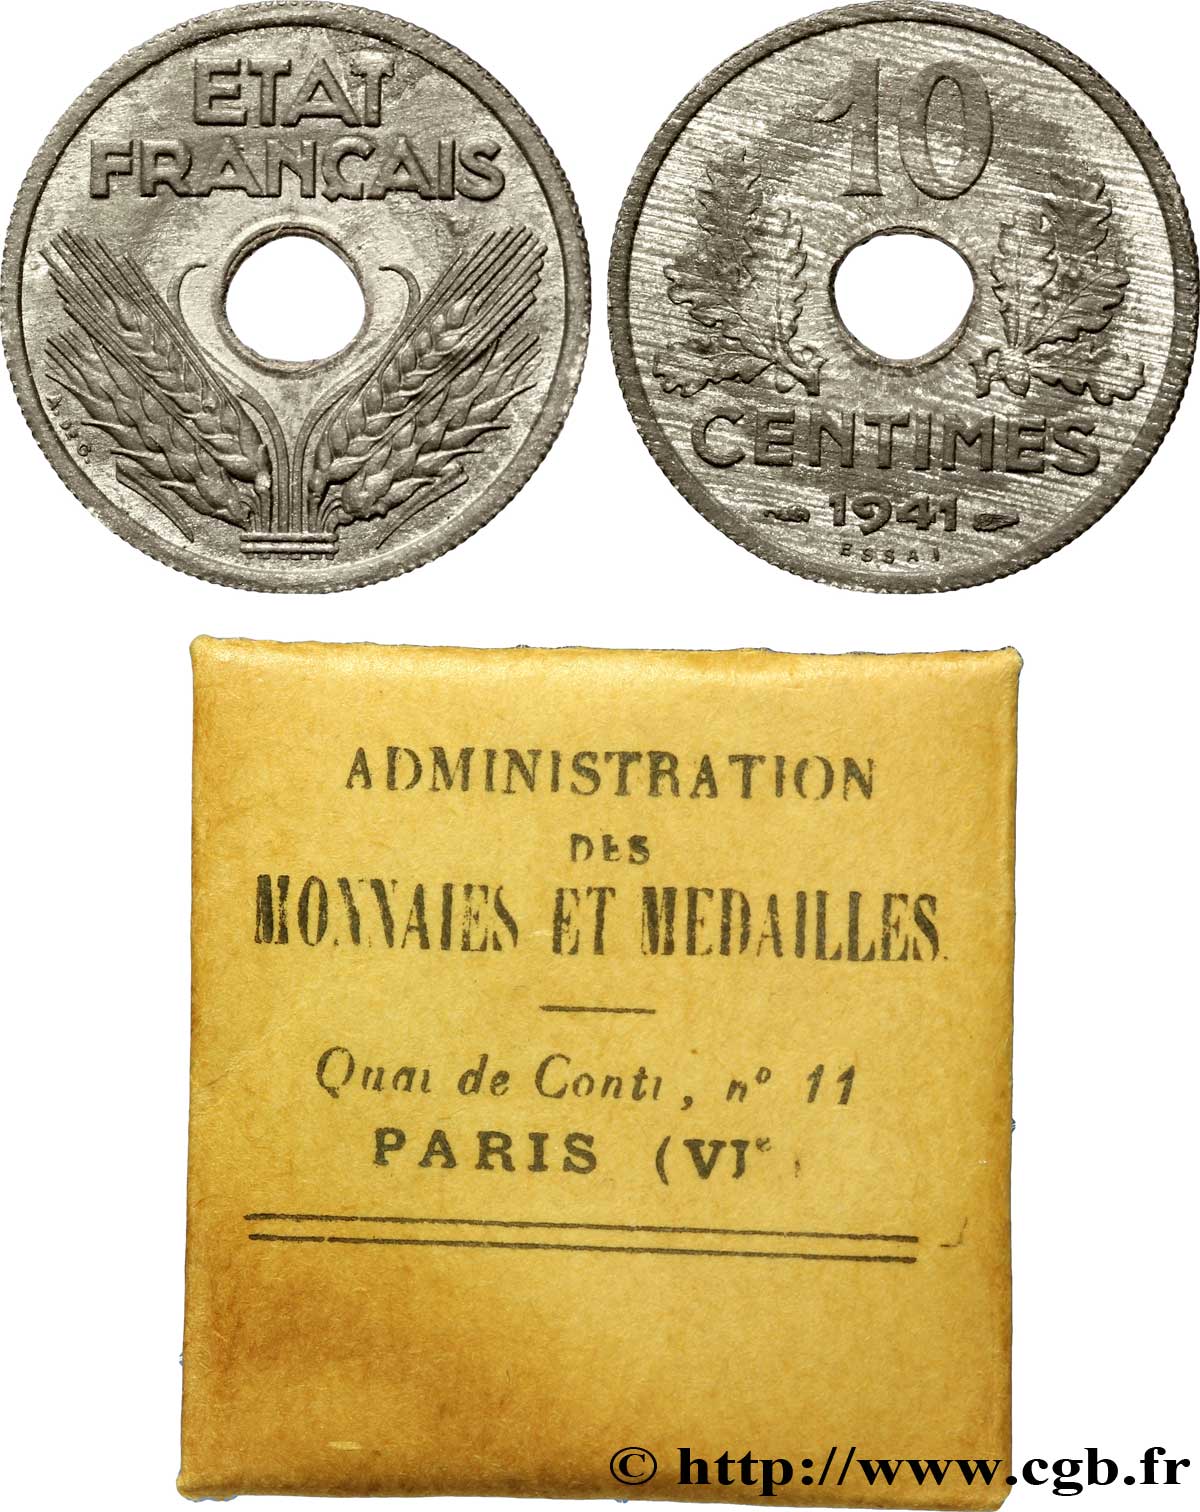 Essai de 10 centimes, État français, grand module 1941  F.141/1 VZ 